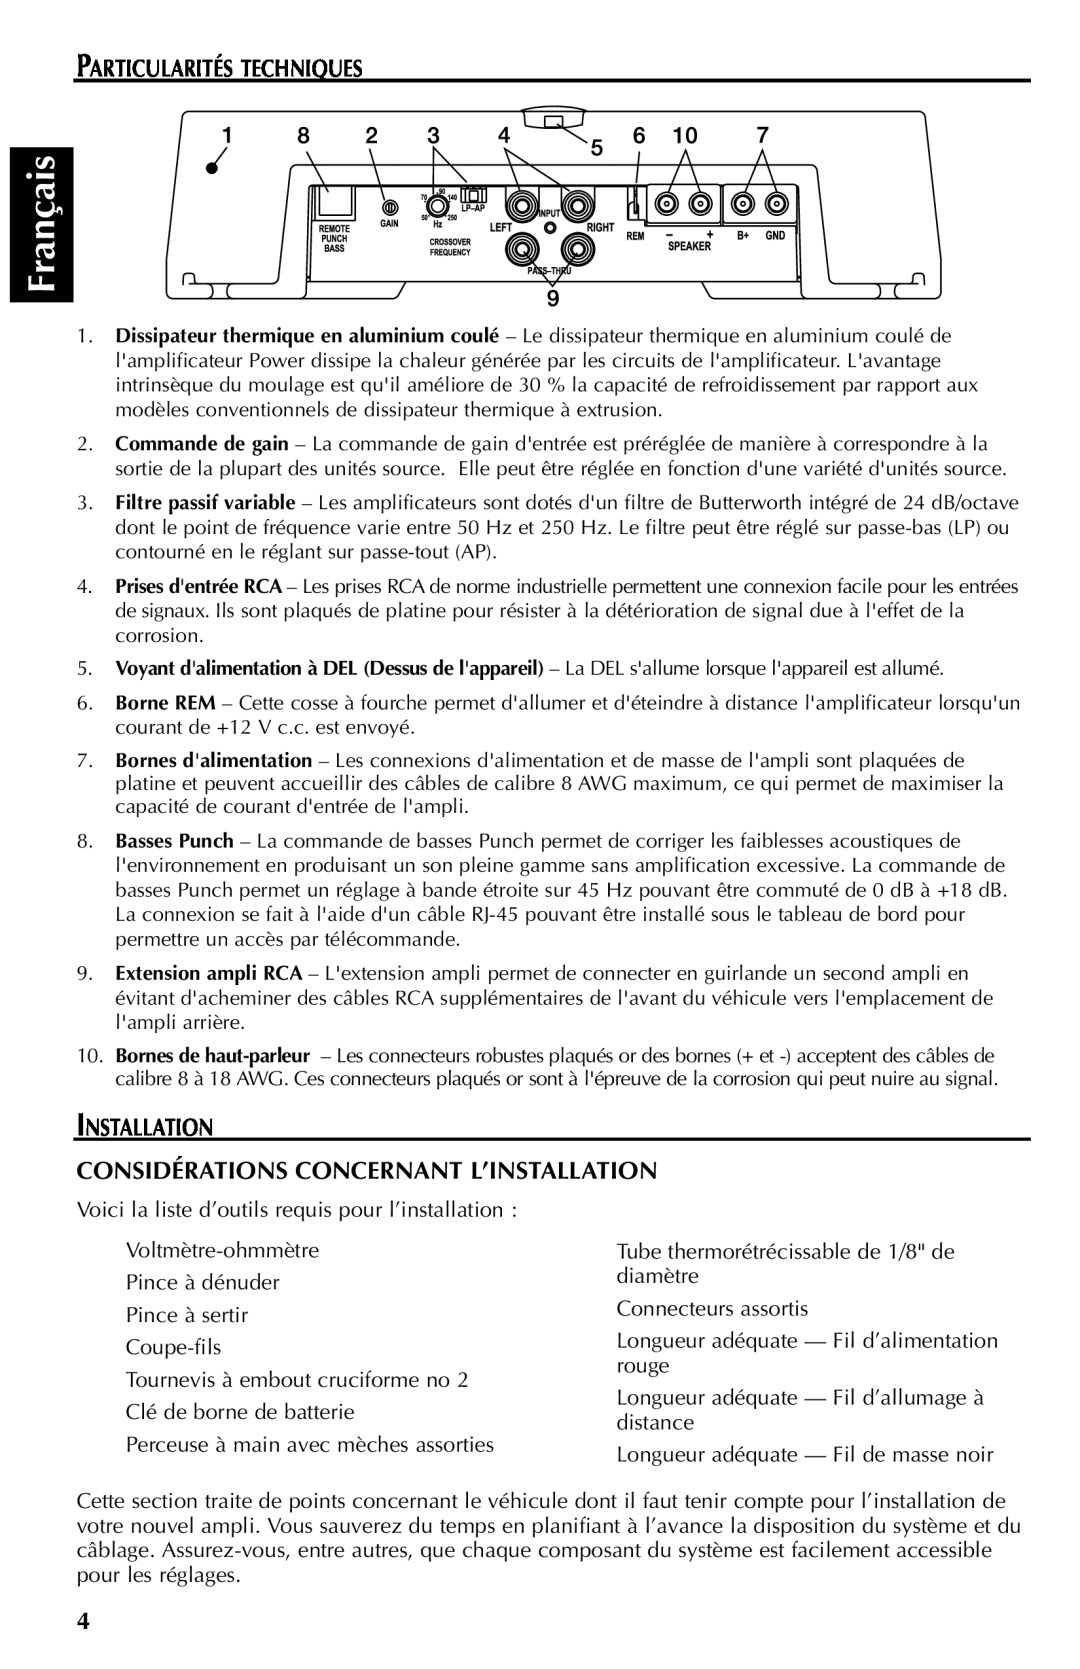 Rockford Fosgate 351M manual Français, Particularités Techniques, Considérations Concernant L’Installation 